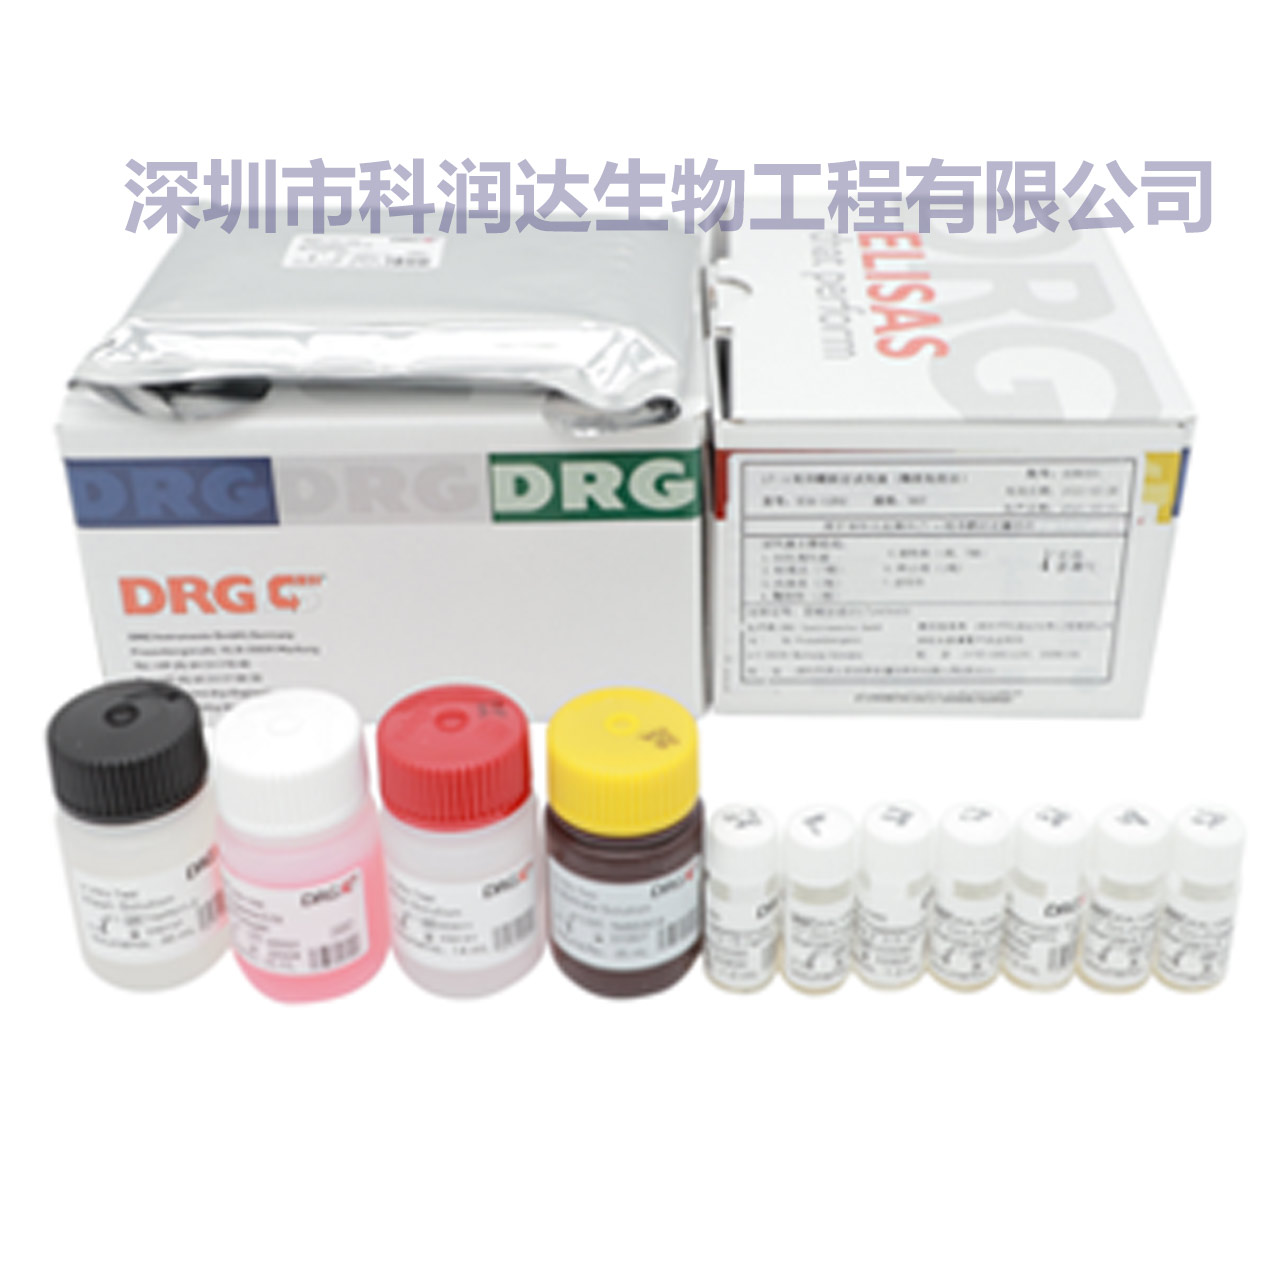 DRG进口试剂盒